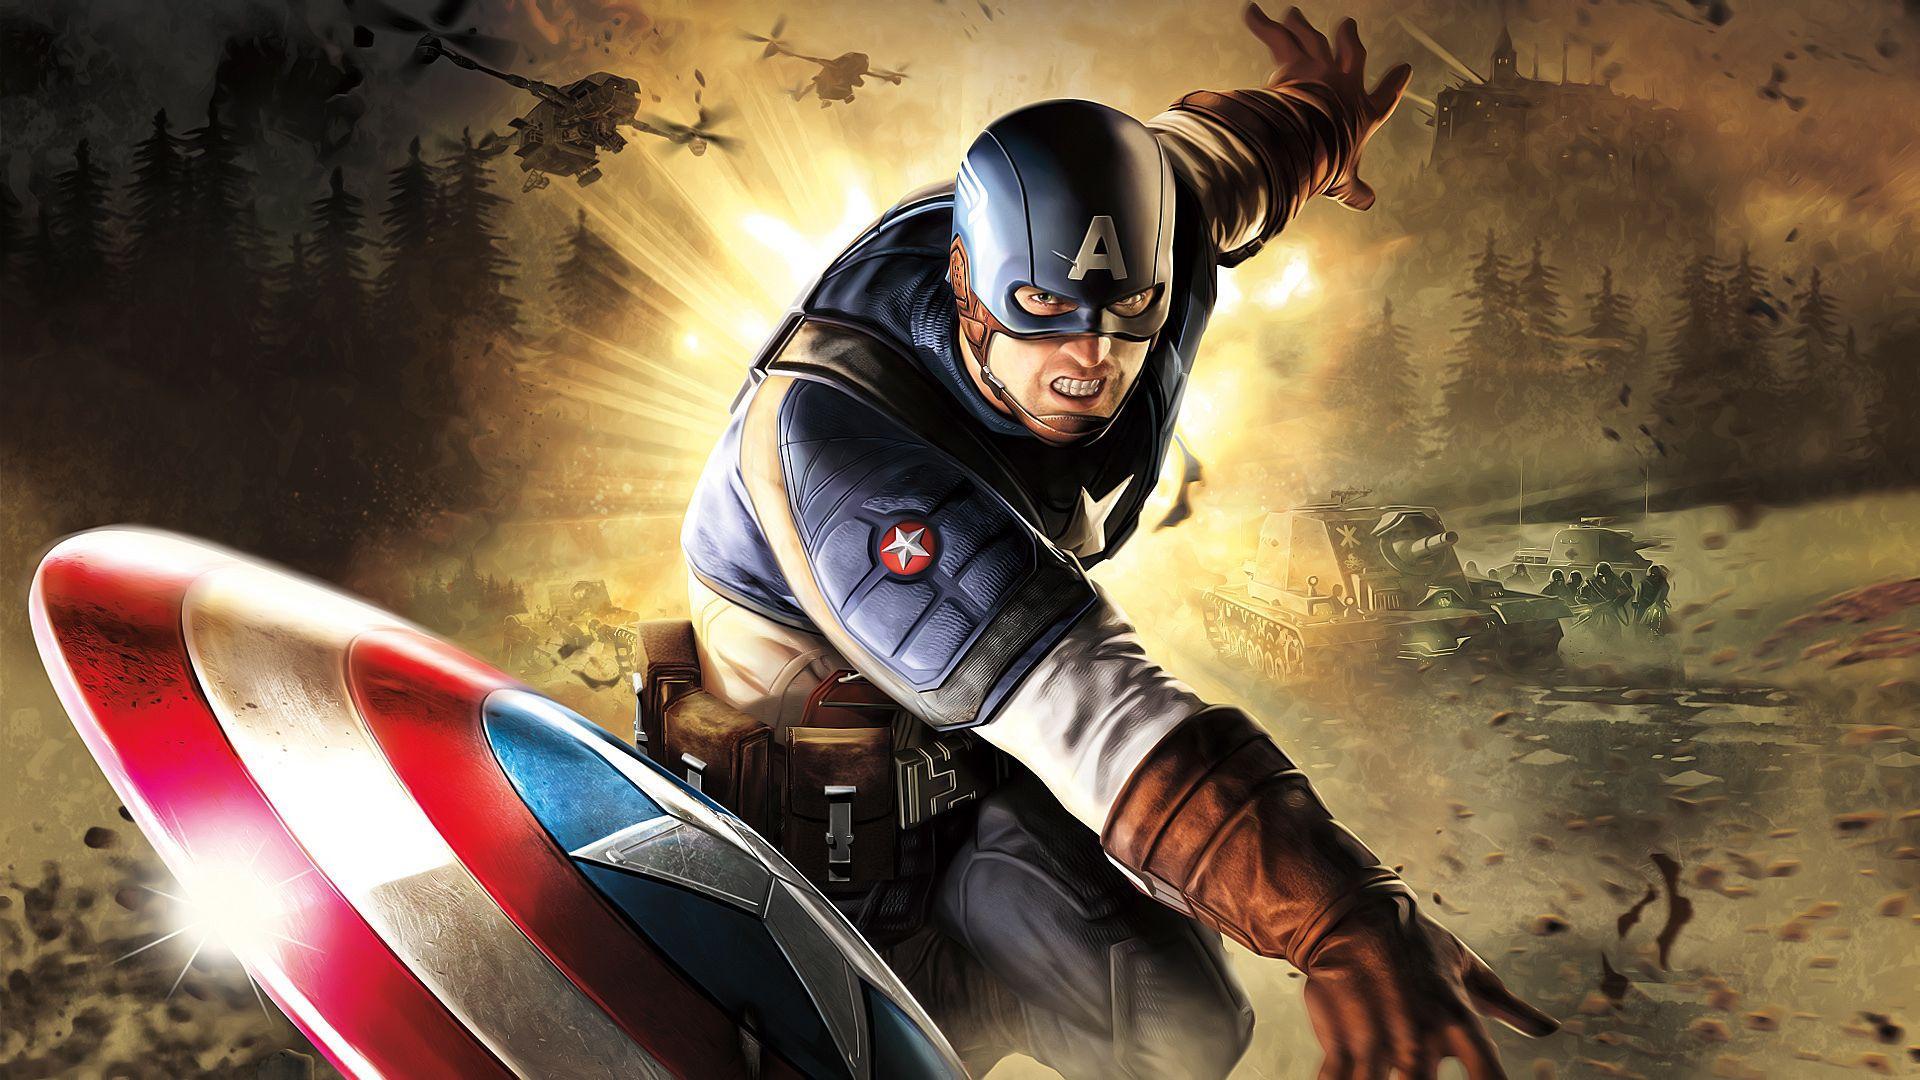 Captain America 2K wallpapers free download